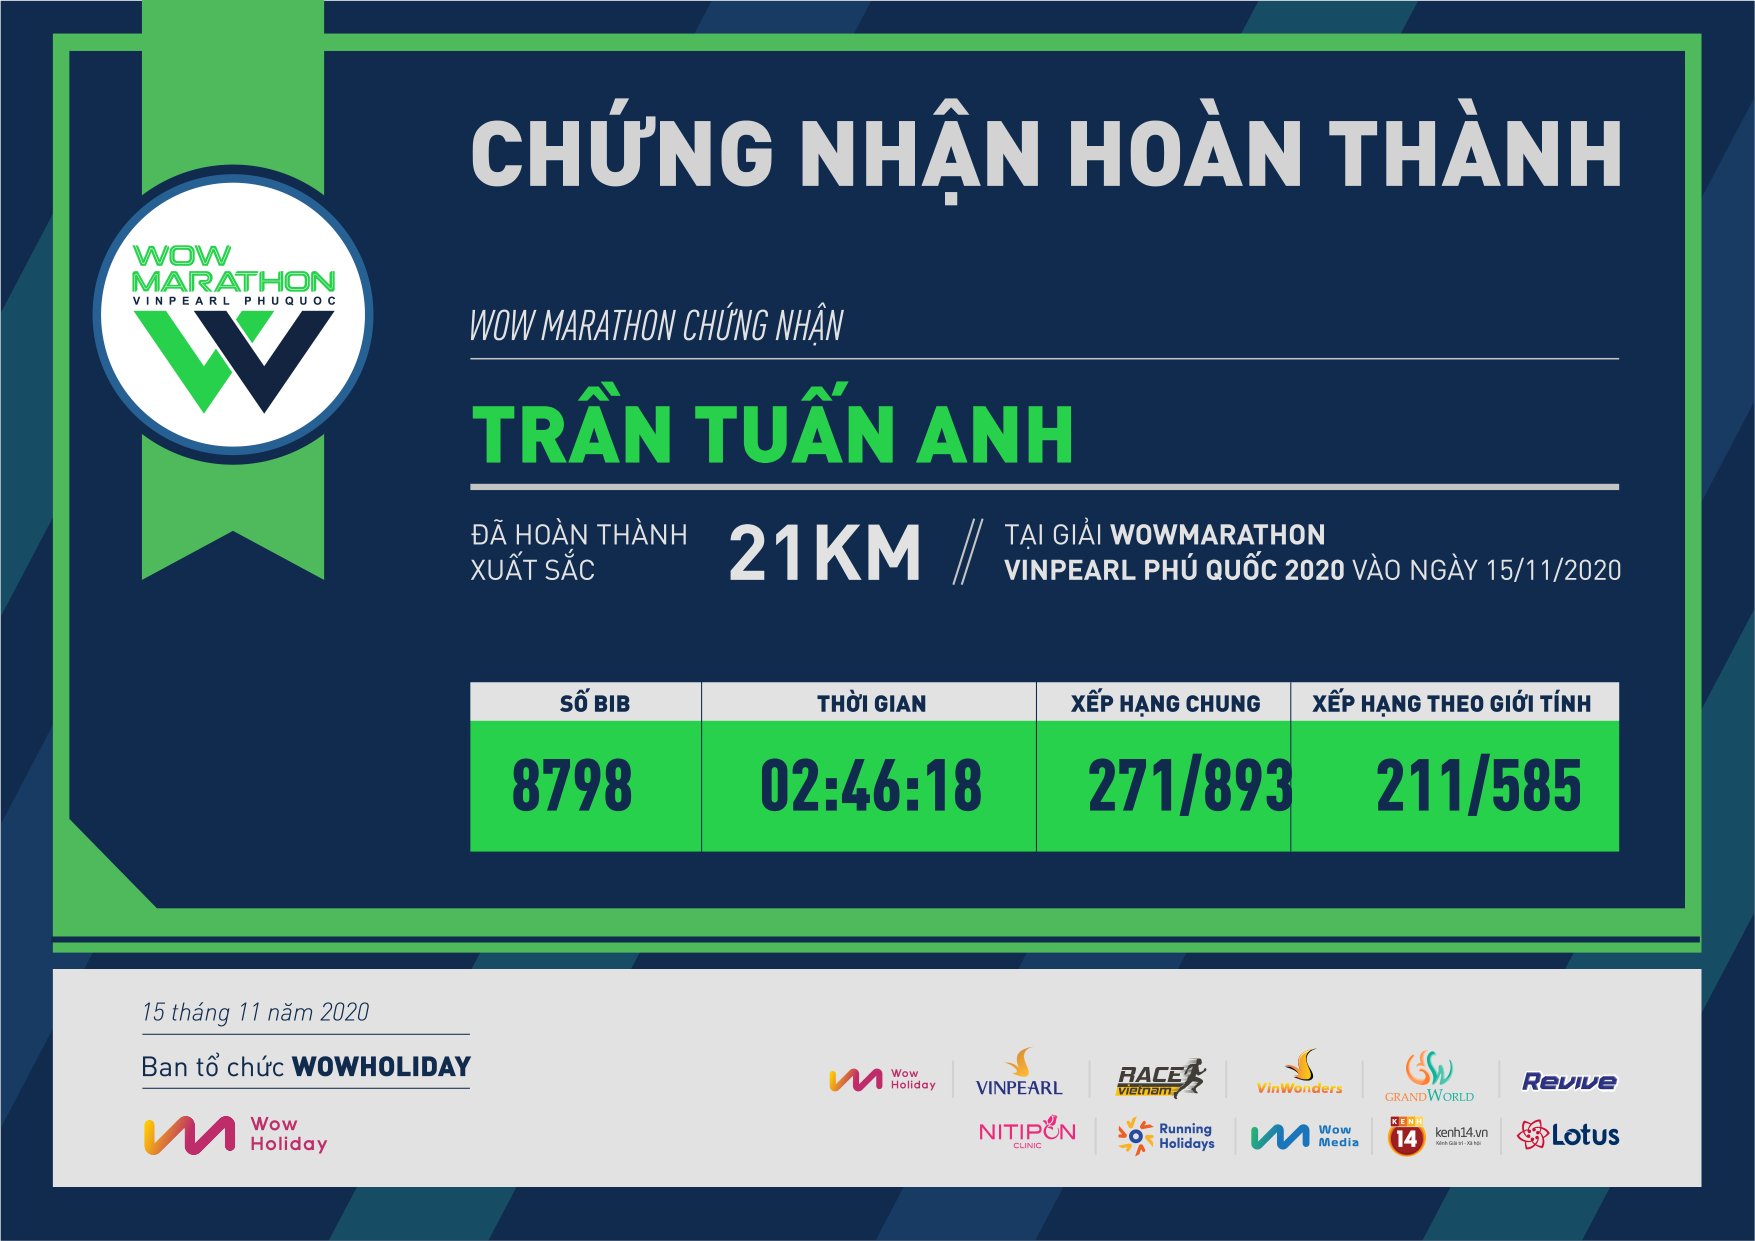 8798 - Trần Tuấn Anh